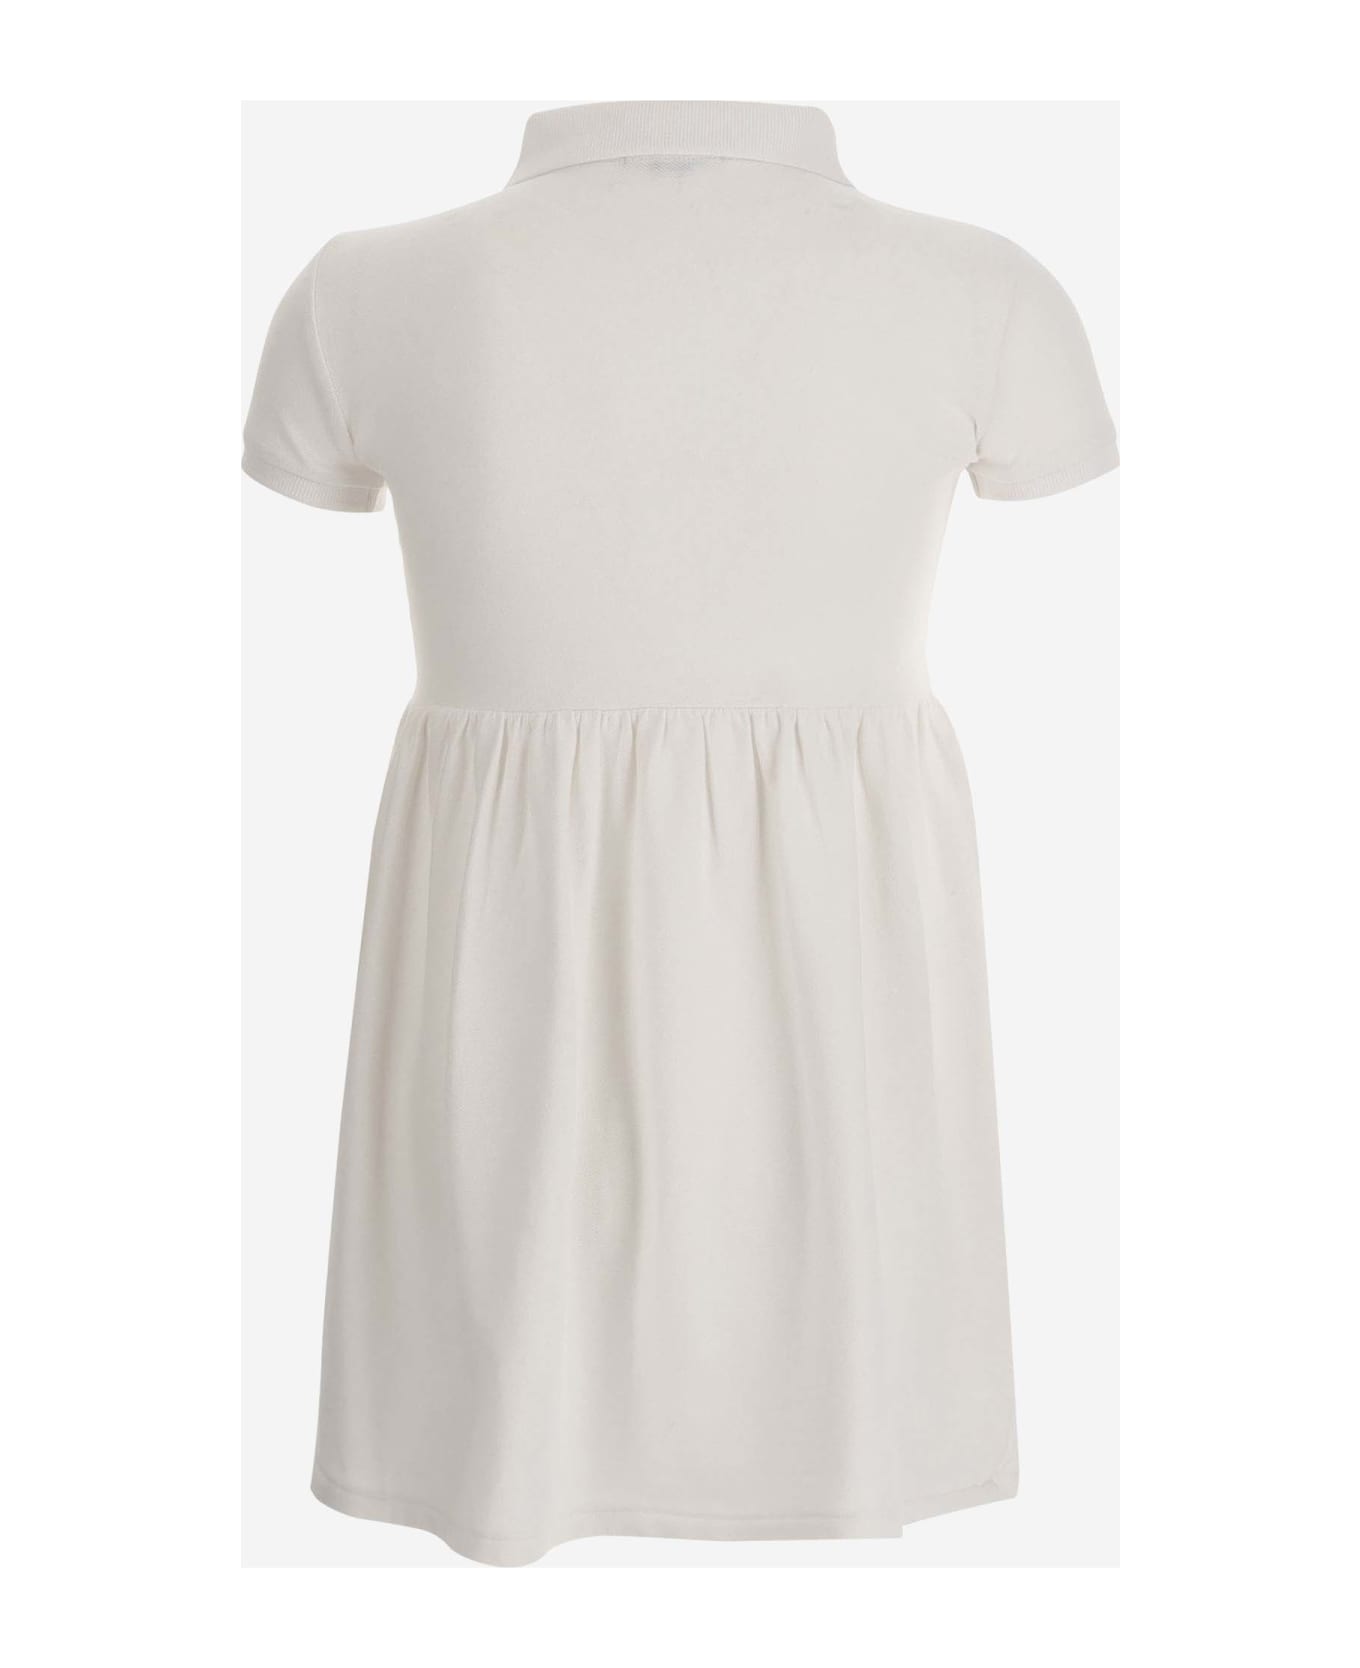 Polo Ralph Lauren Stretch Cotton Dress With Logo - White